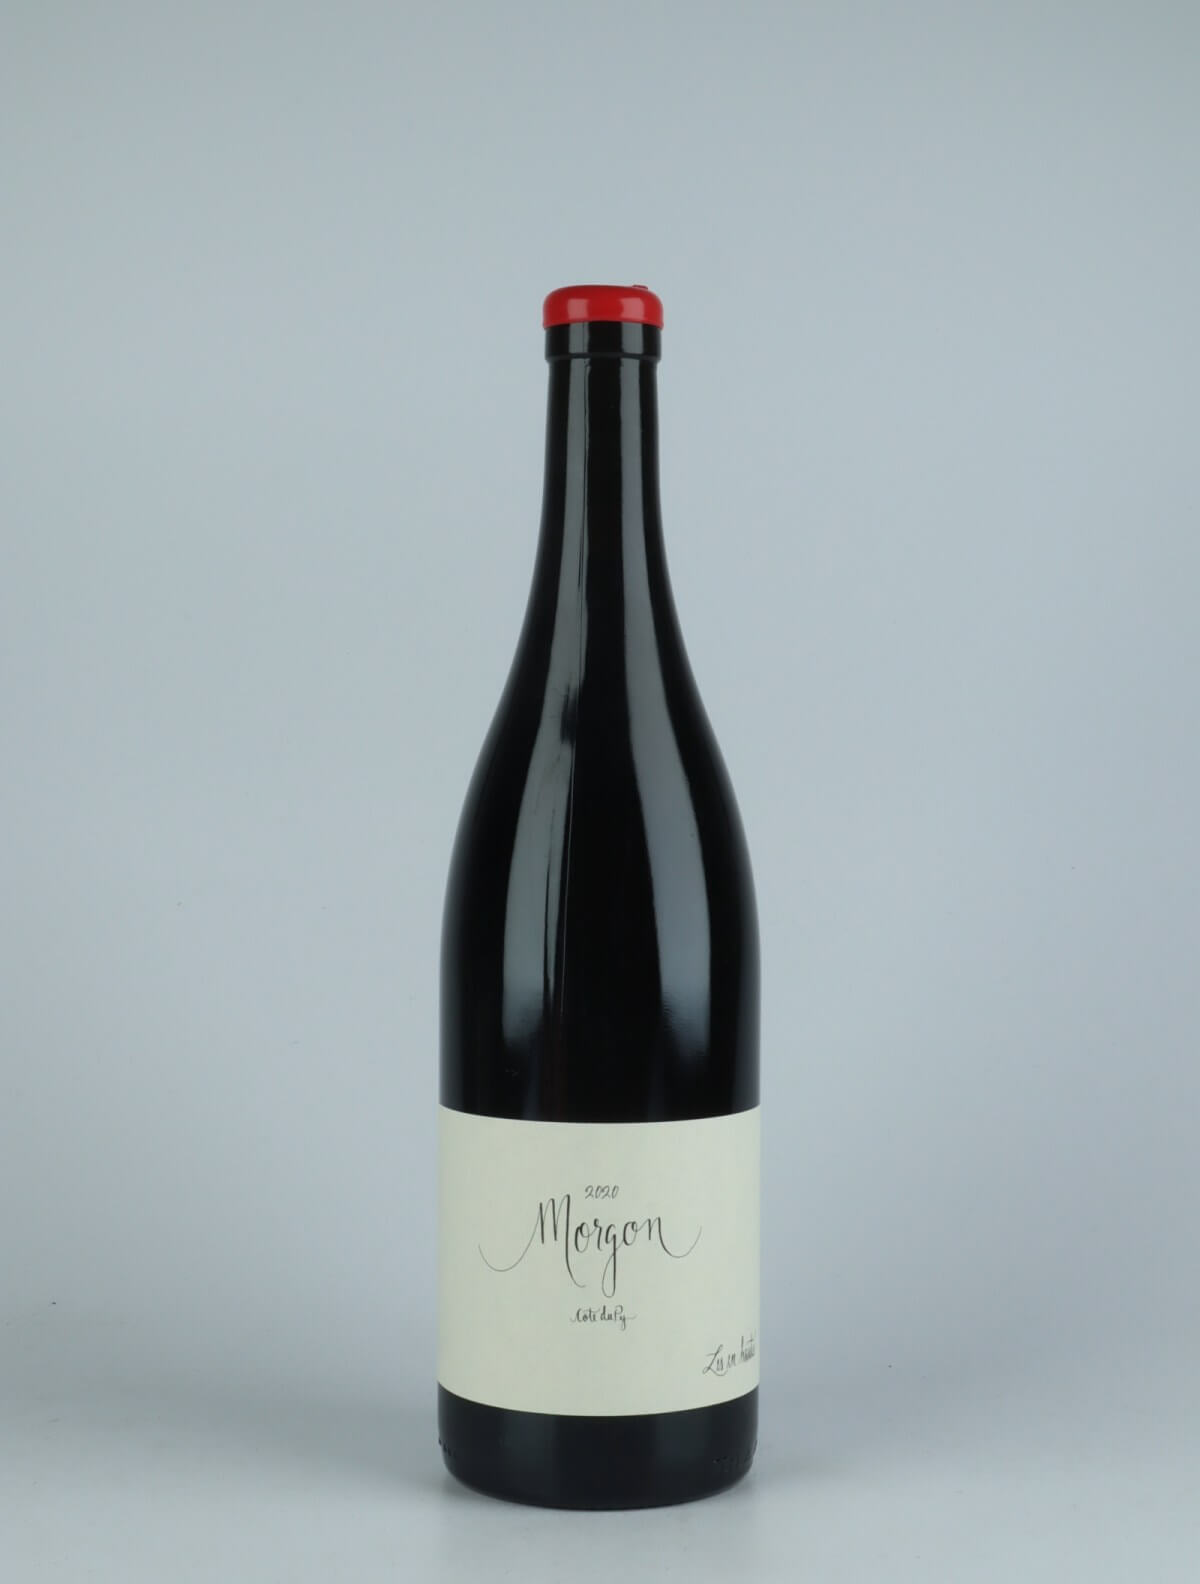 En flaske 2020 Morgon - Côte du Py Rødvin fra Les En Hauts, Beaujolais i Frankrig